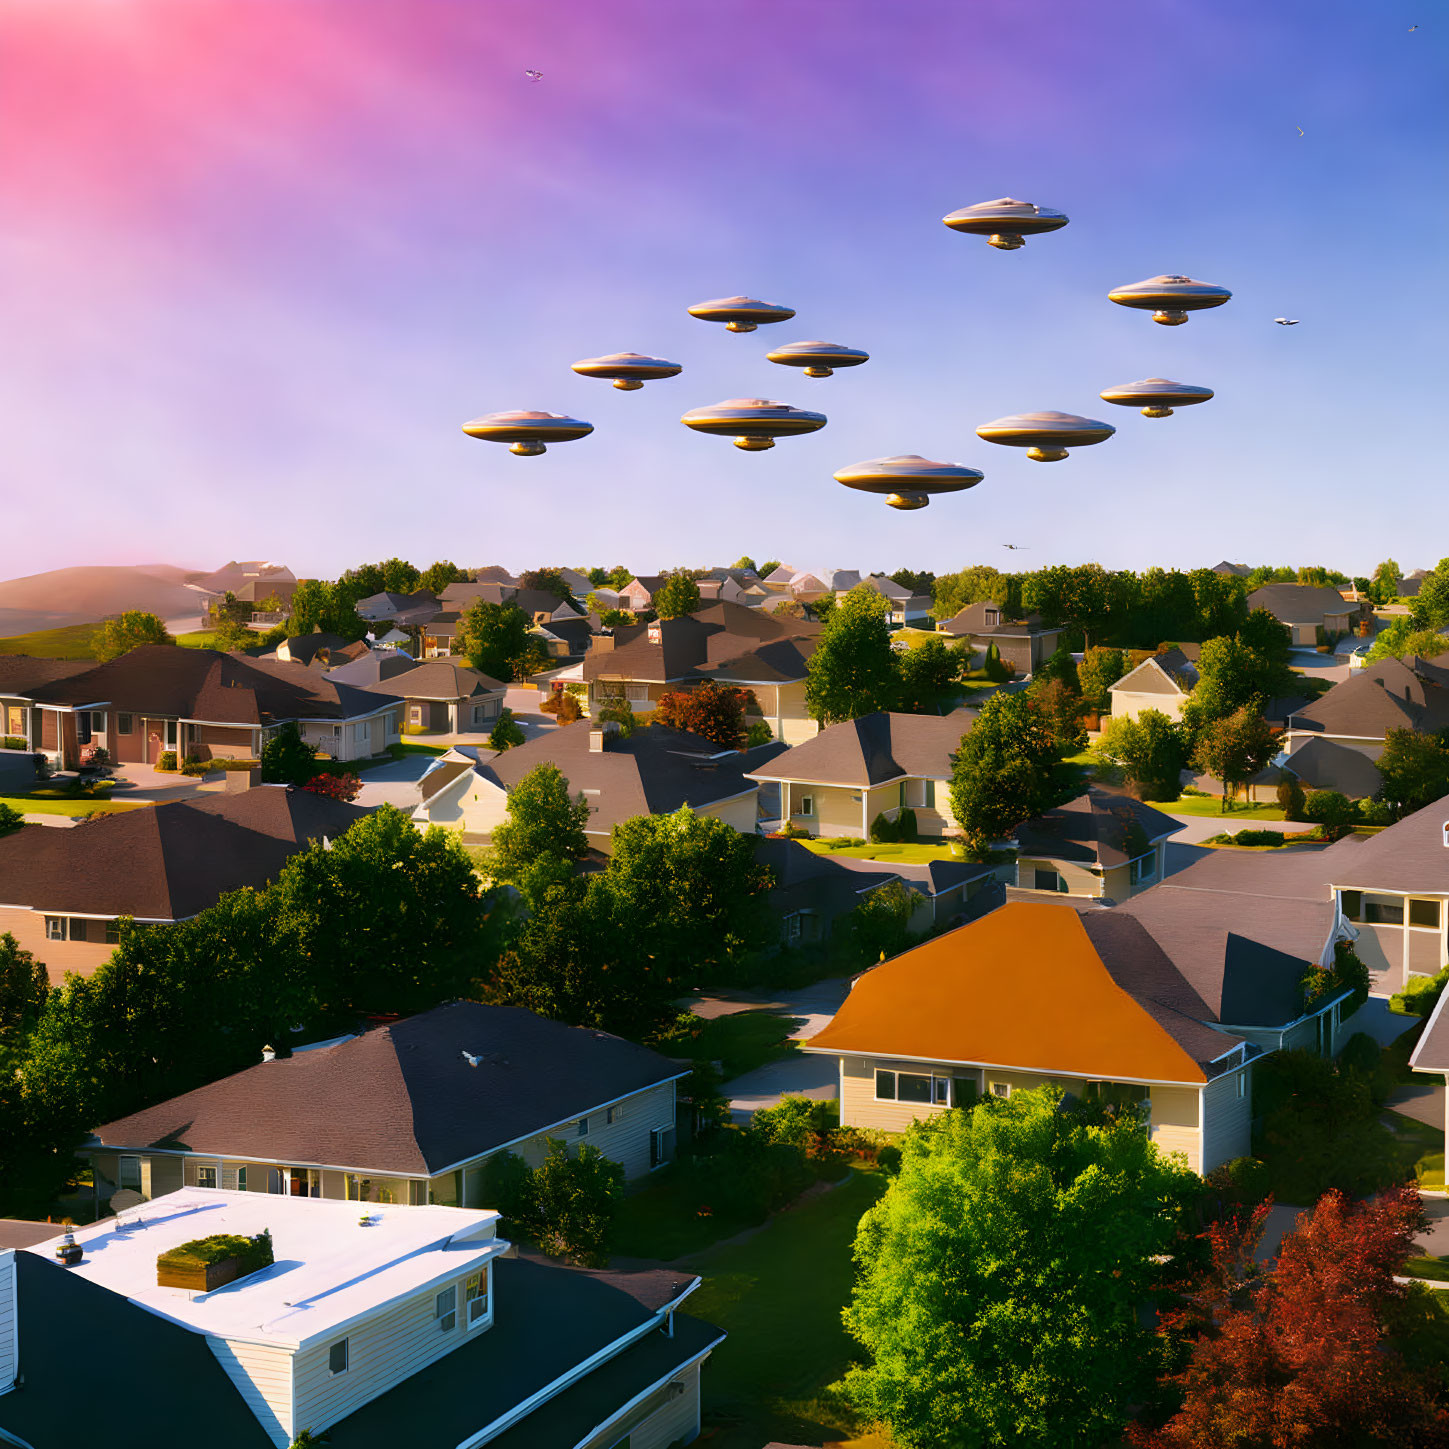 Colorful Sunset Sky with Fleet of UFOs in Suburban Neighborhood